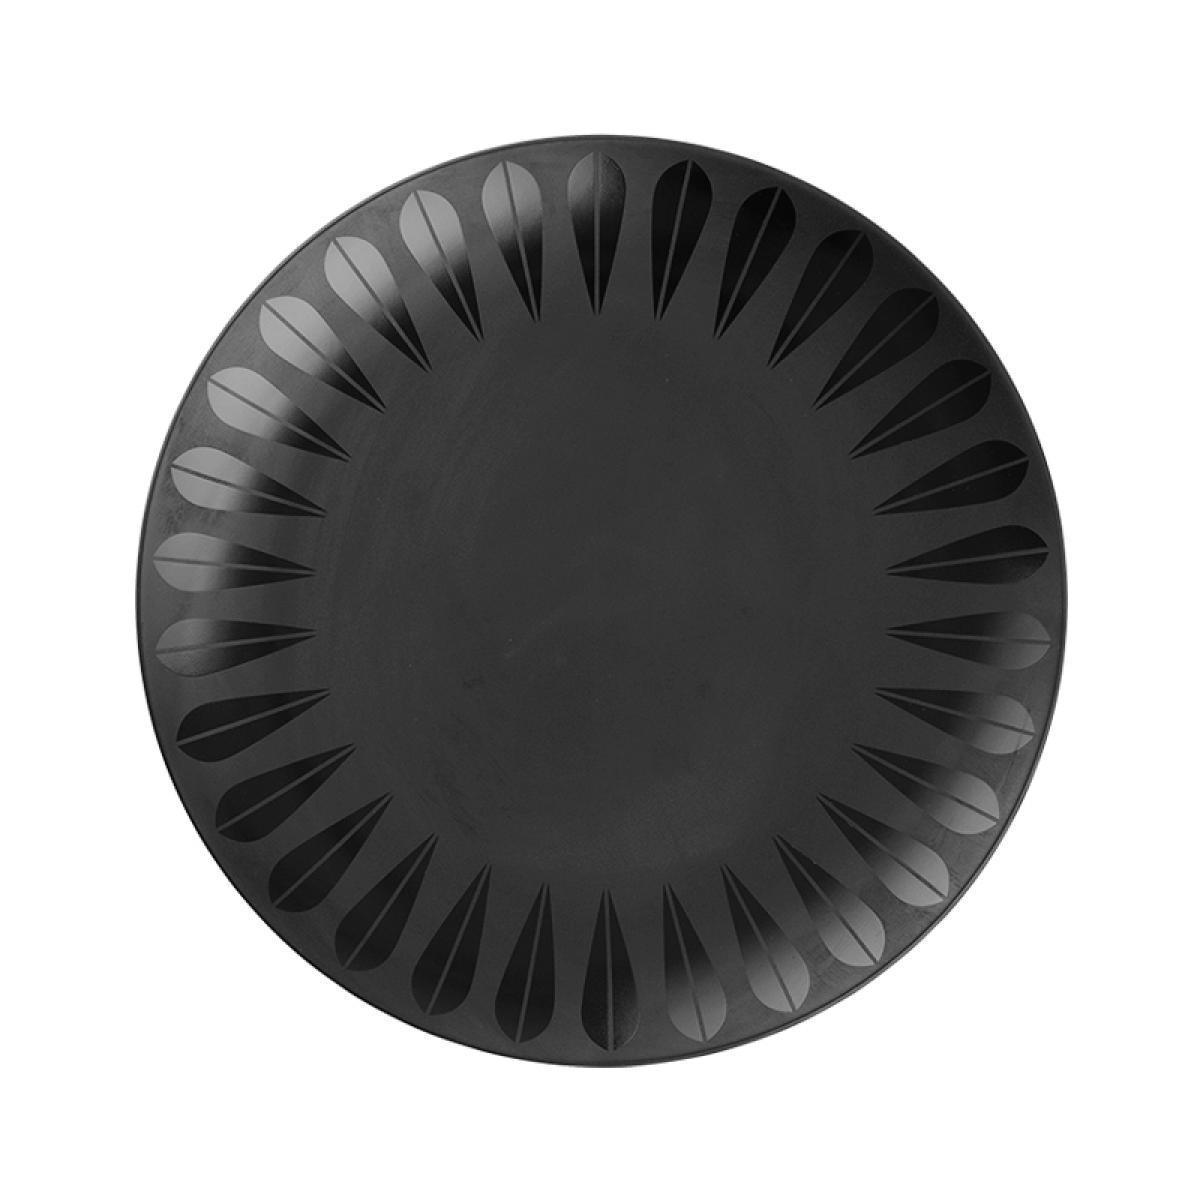 Lucie Kaas Arne Clausen Deep Plate Black, ø 28cm